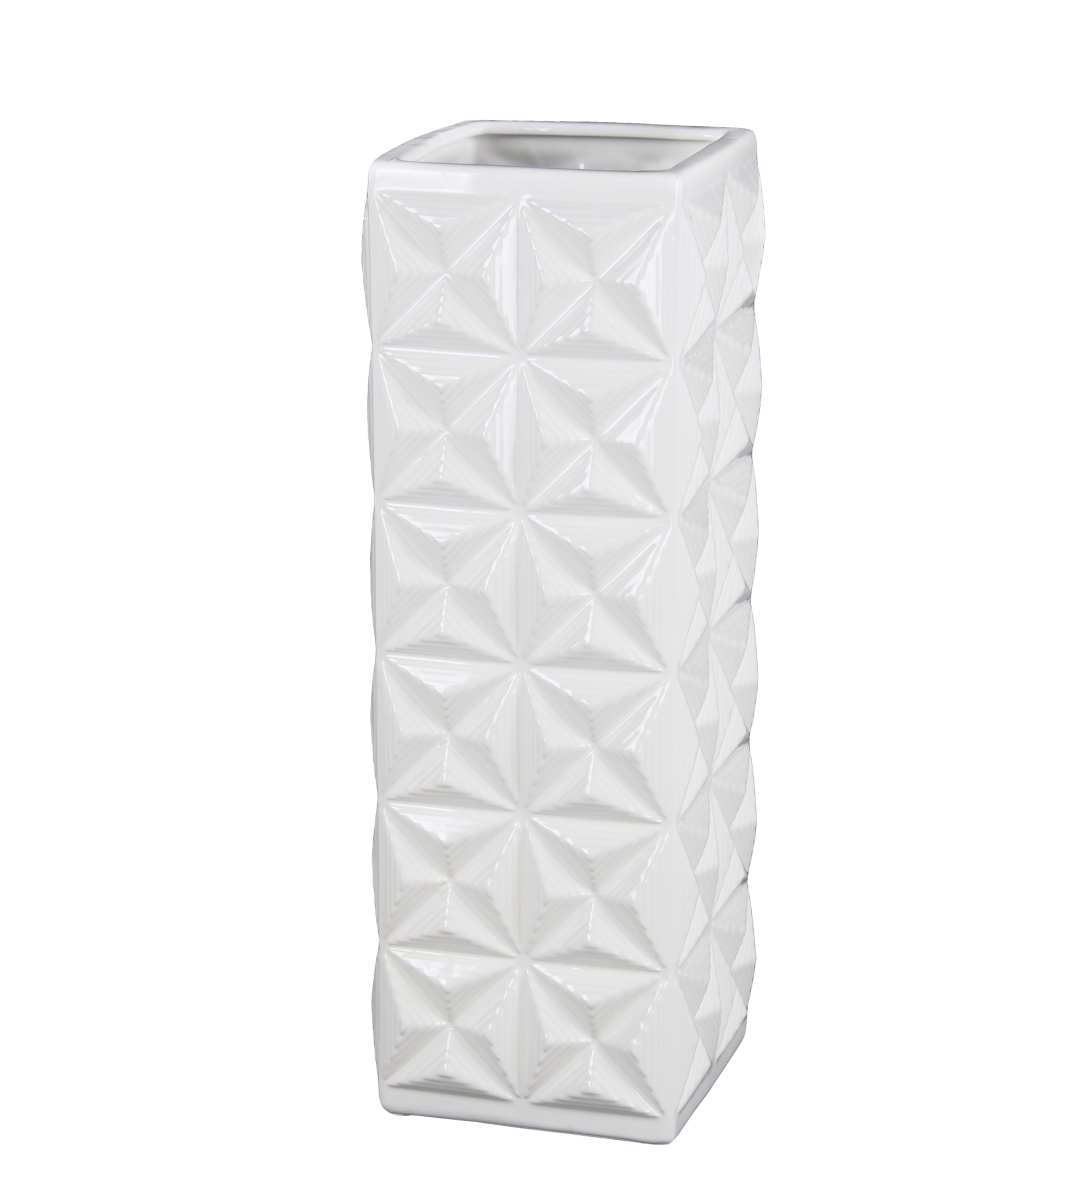 45215 Ceramic Vase, White - Small